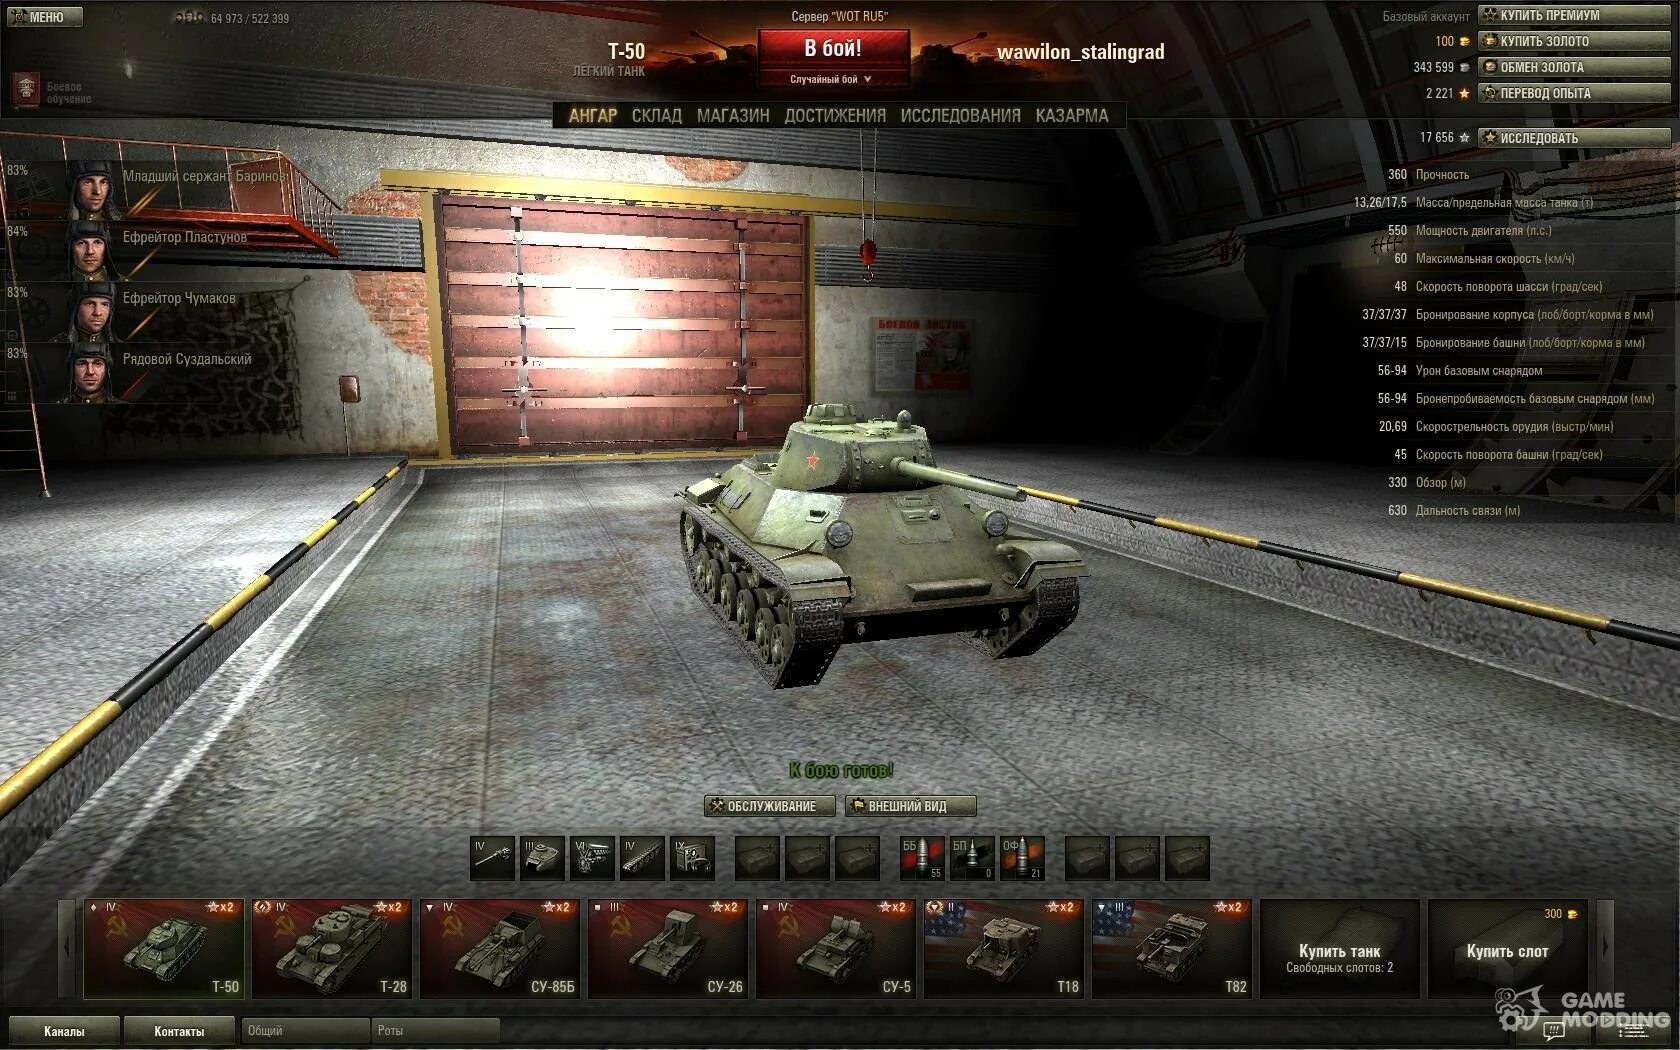 Ворлд оф танк ангар. Премиум ангар для World of Tanks. World of Tanks гараж. ИС 360 танк в World of Tanks.